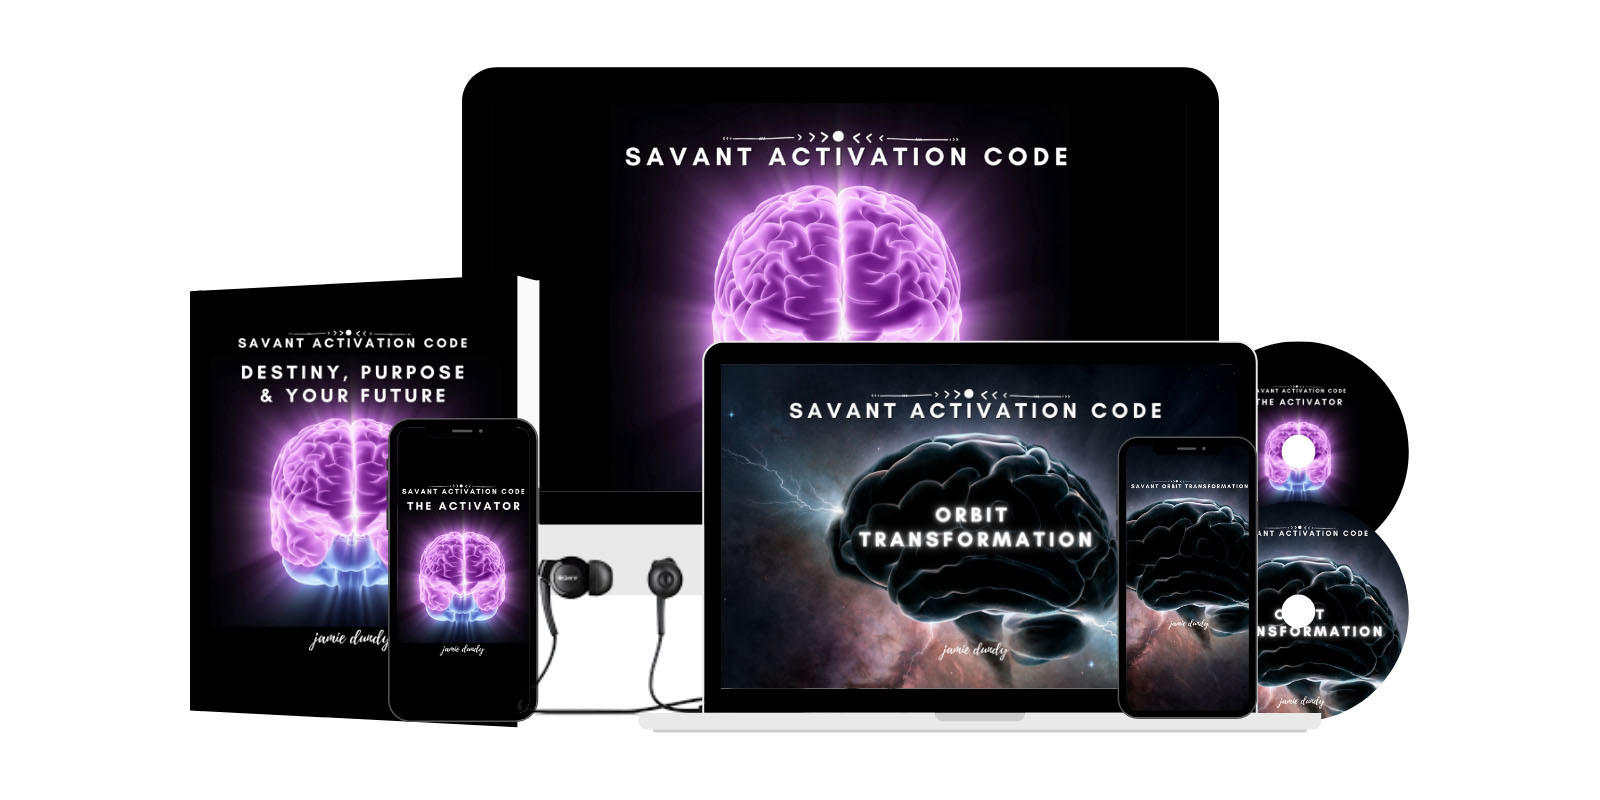 The Savant Activation Code Reviews